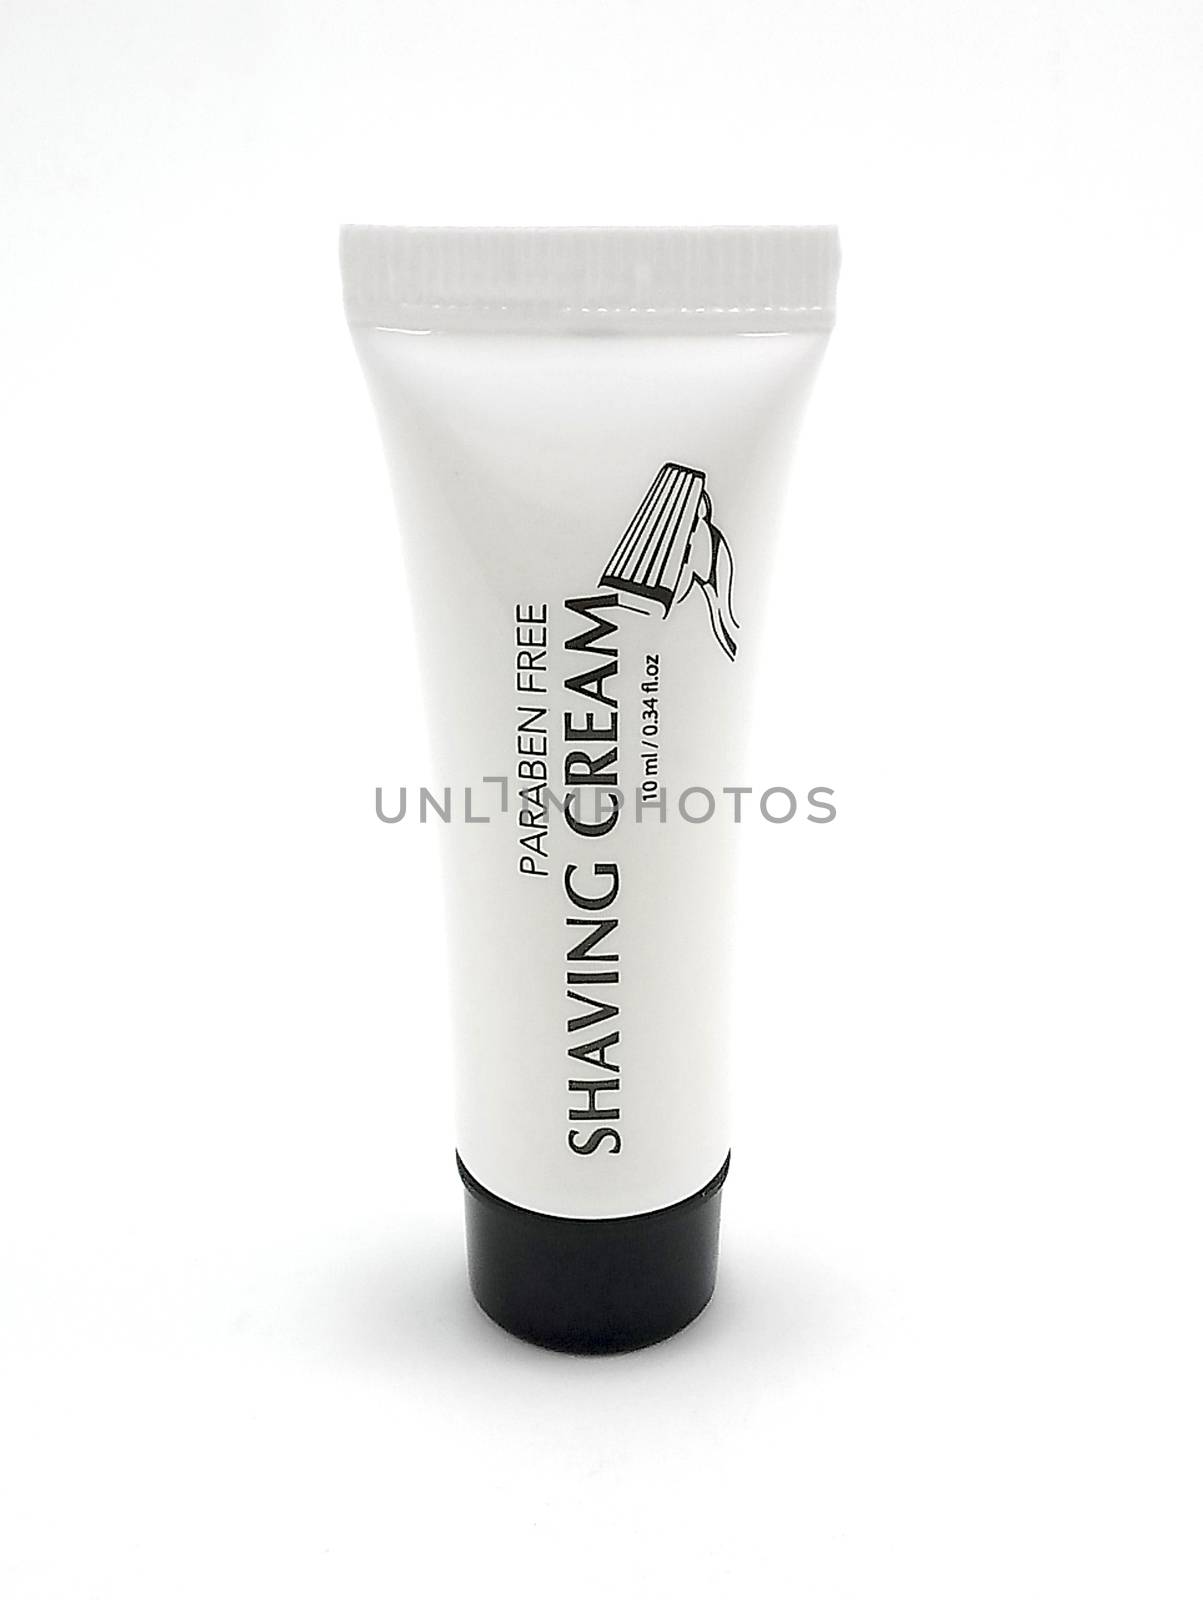 Disposable shaving cream plastic tube by imwaltersy